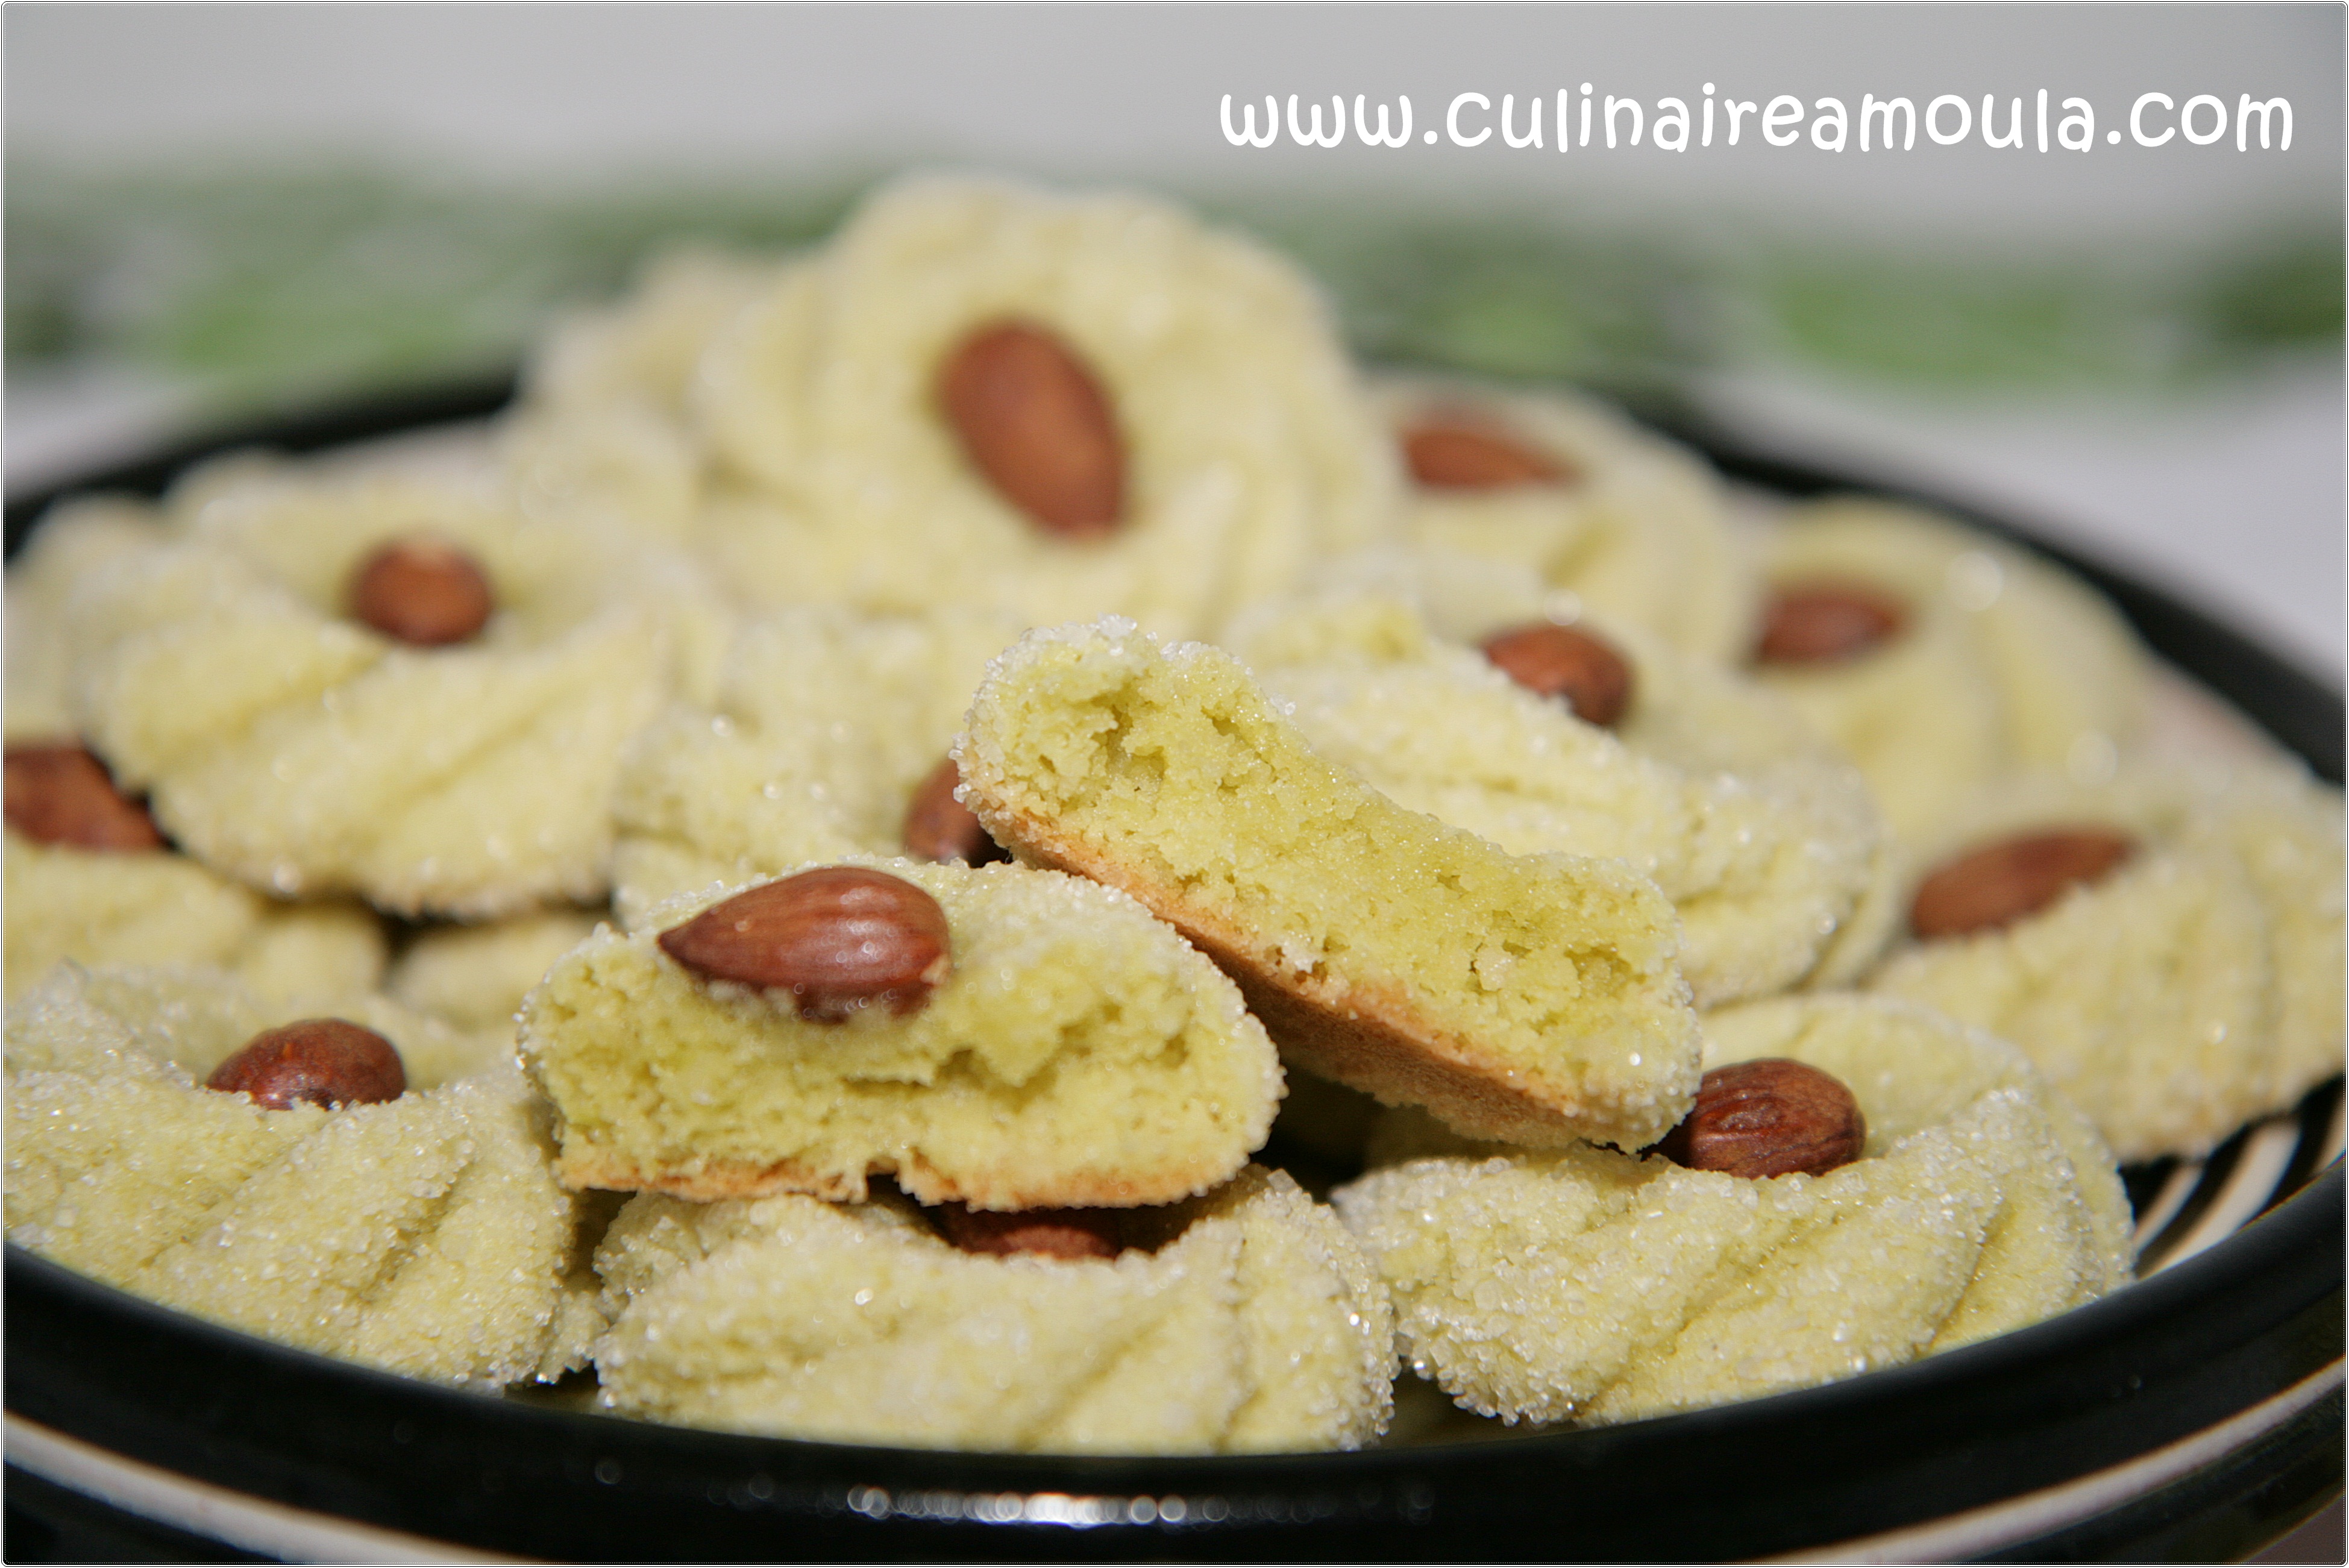 Gheriba à la pistache #gheriba #pistache #amande #rose #marocaine  http://www.culinaireamoula.com/article-gheriba-a-la-pistache-120487841.html